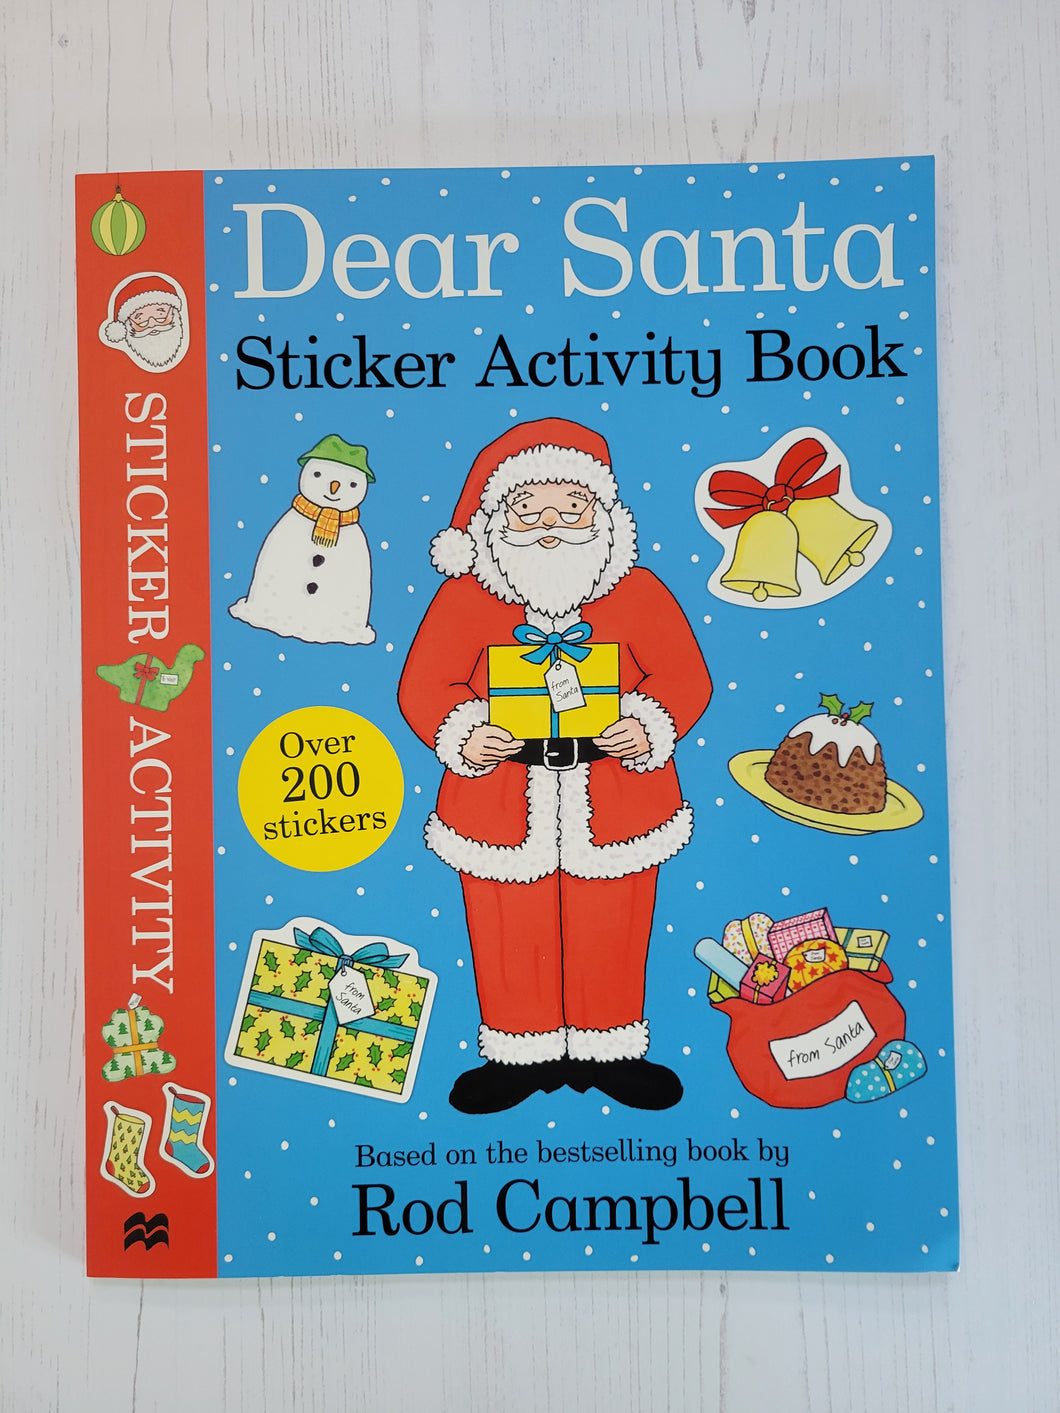 Dear Santa Sticker Activity Book